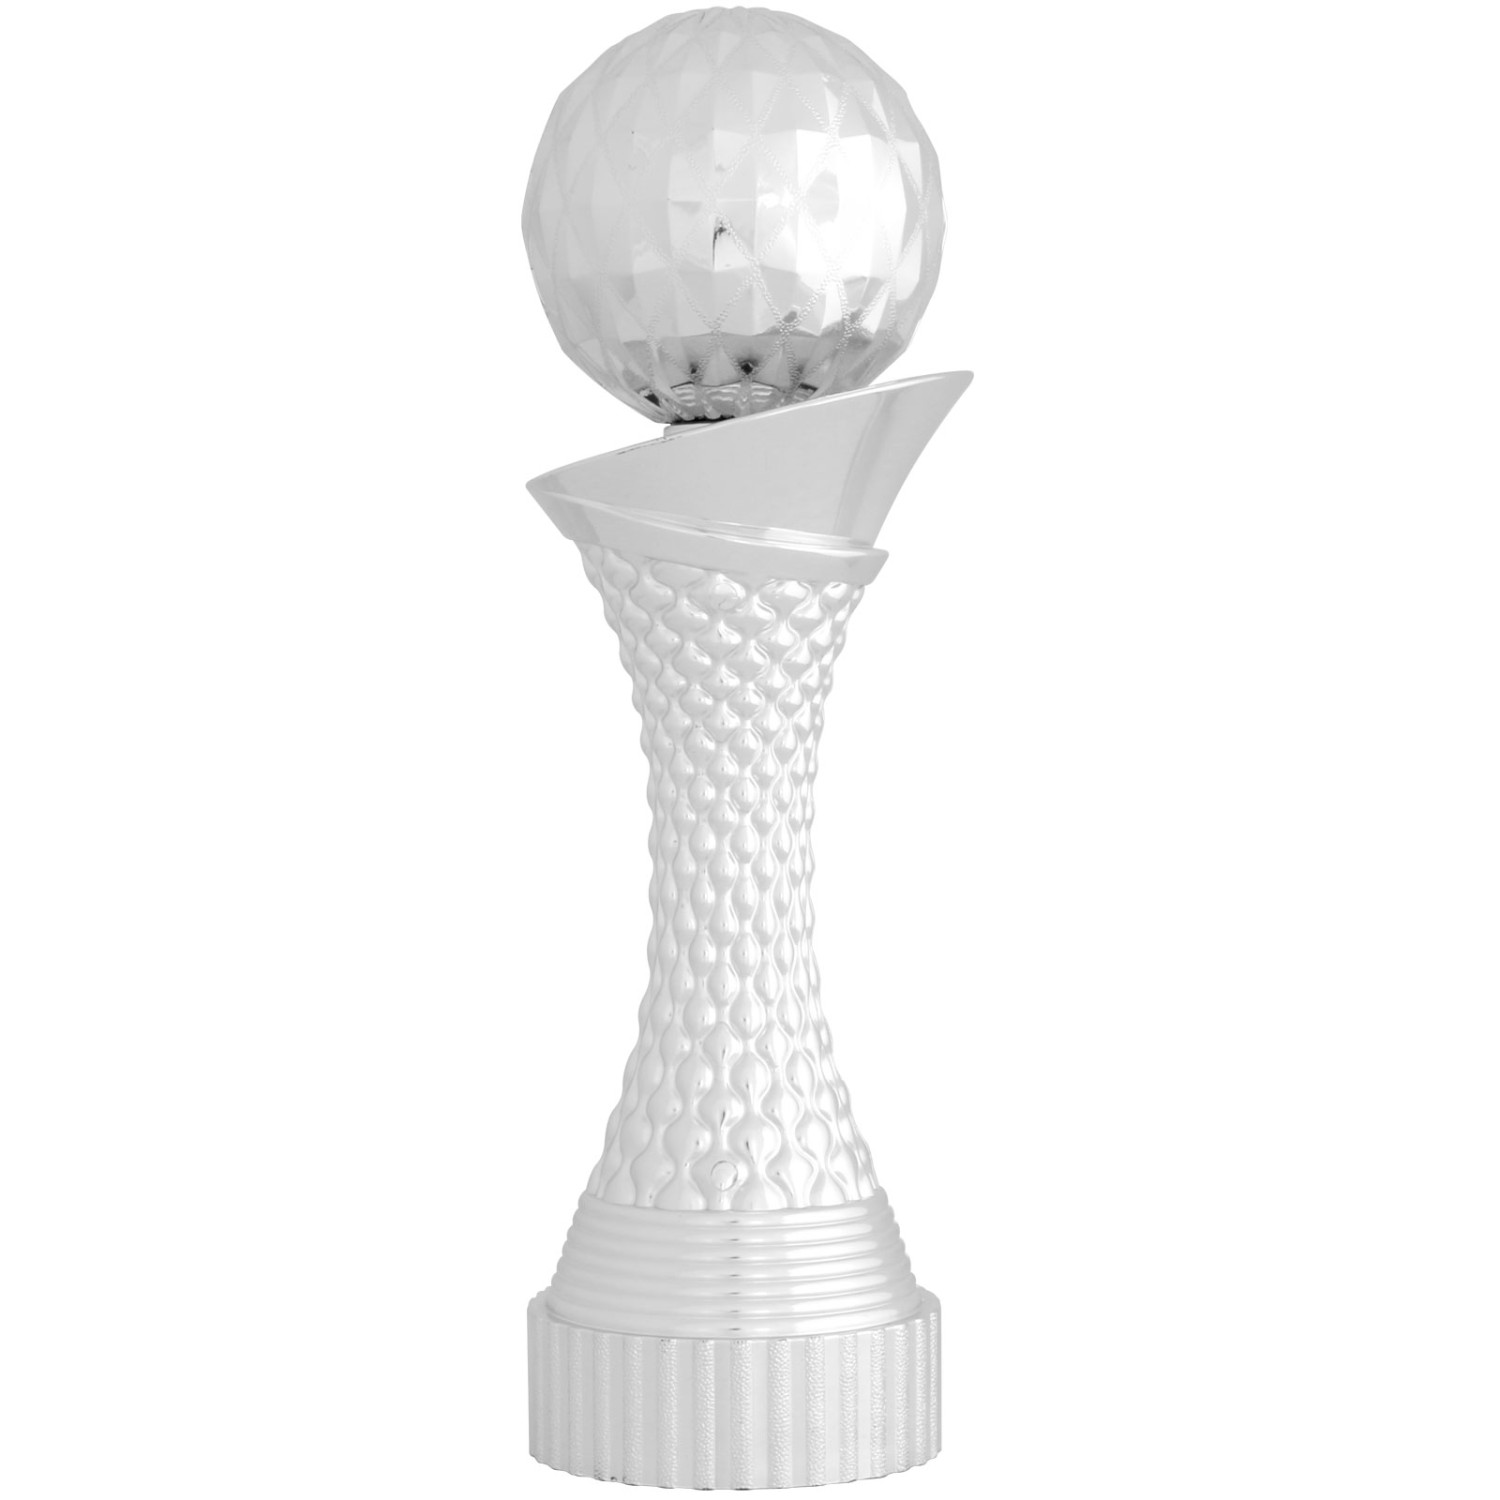 2. Foto Billard Pokal AVORD Pool Snooker silber mit Gravur (Größe: 3er Set je 1x S,M,L)